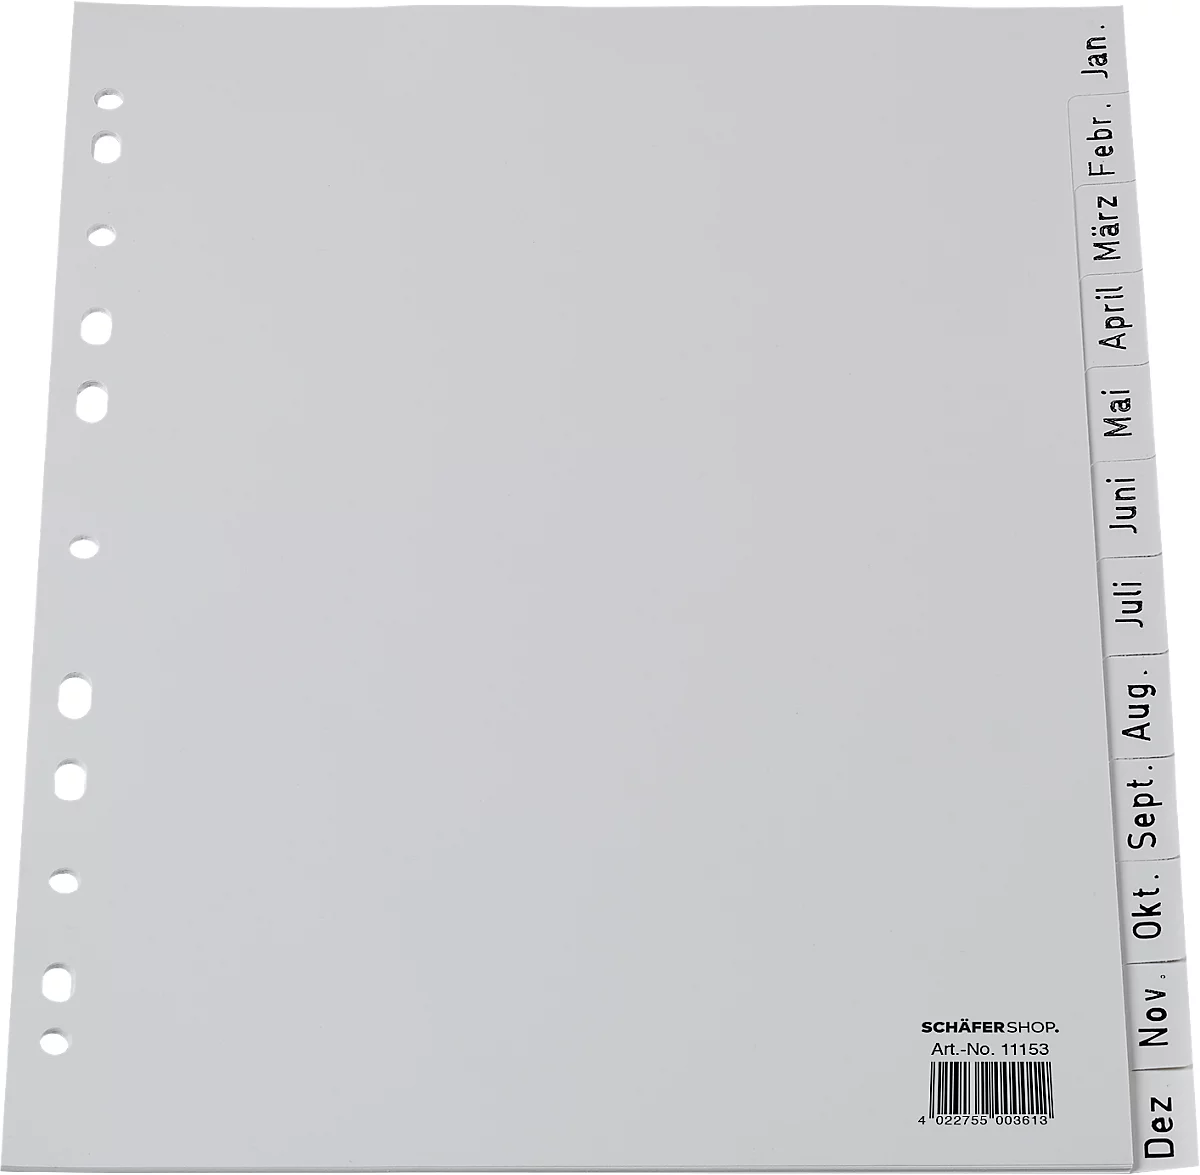 Schäfer Shop Select Etiquetas de PP para carpetas, formato completo DIN A4, calendario enero-diciembre (12 hojas), gris